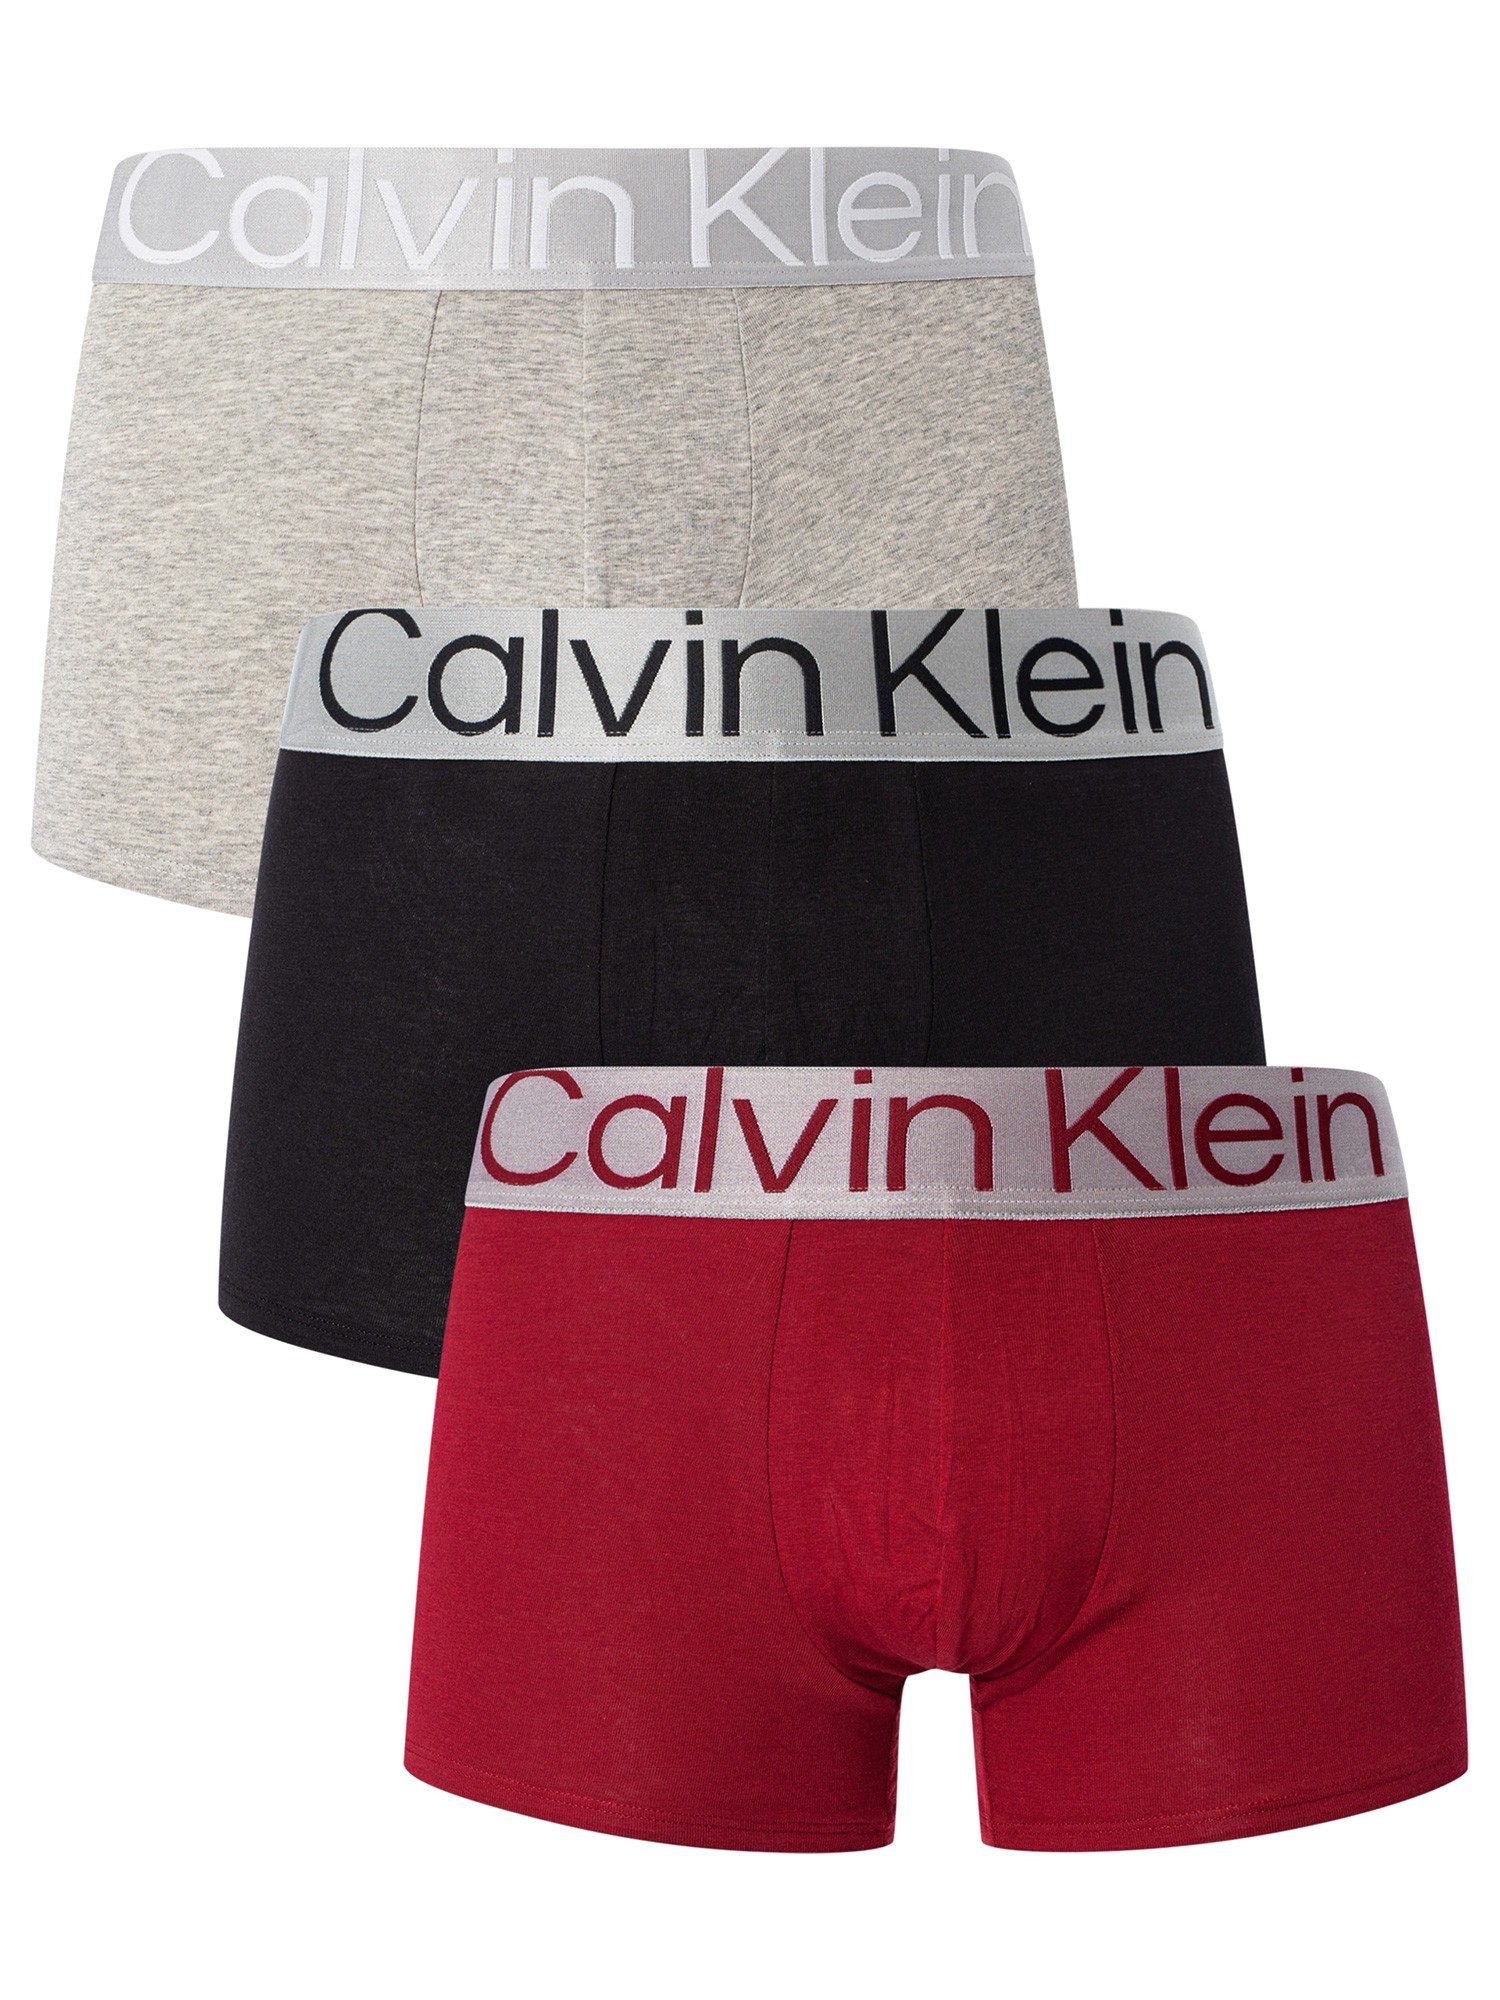 Calvin Klein 3 Pack Reconsidered Steel Trunks - Red Carpet/Black/Grey  Heather | Standout